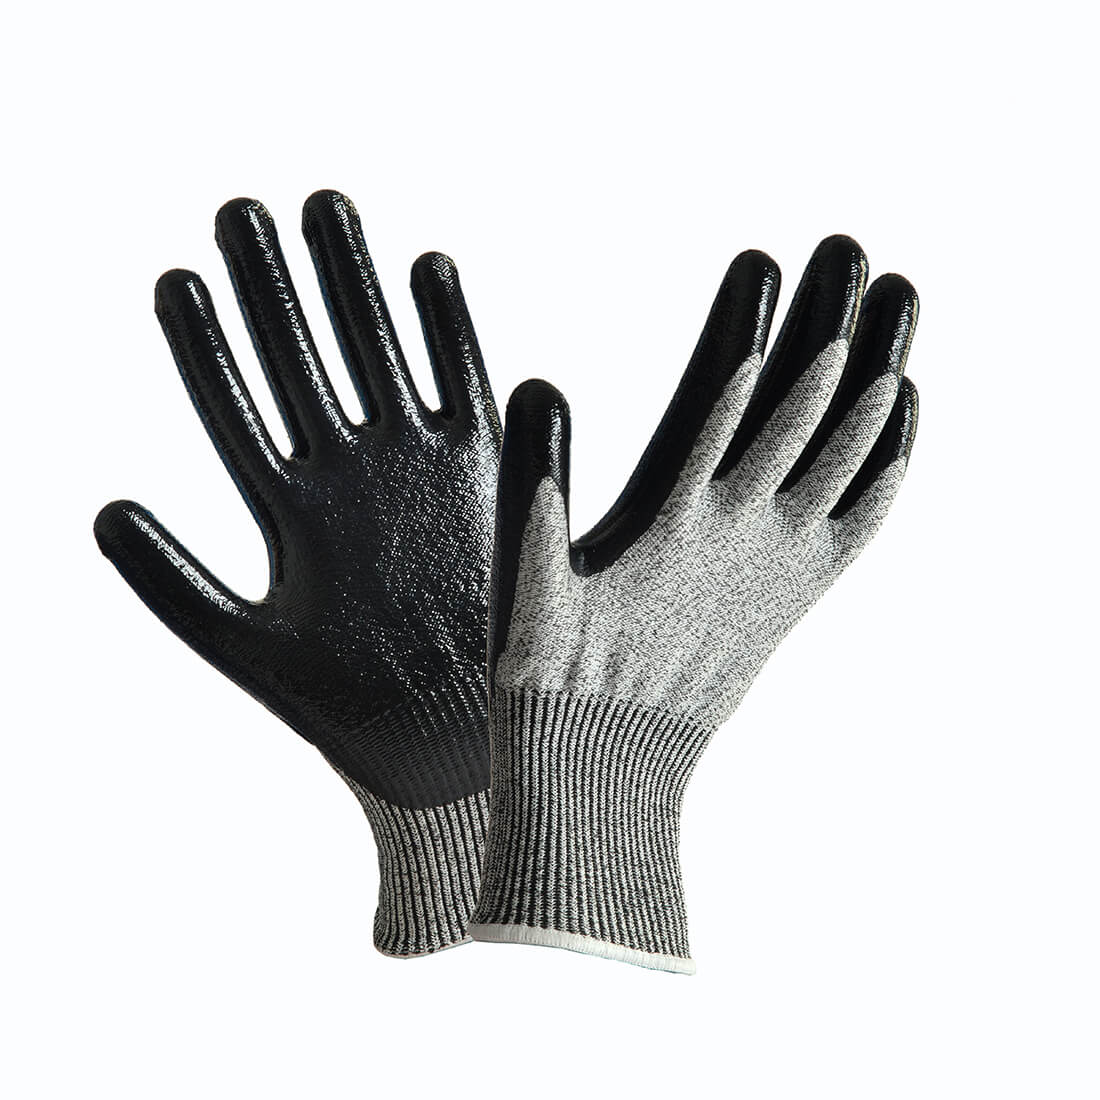 Cut resistance gloves,nitrile coated (1)